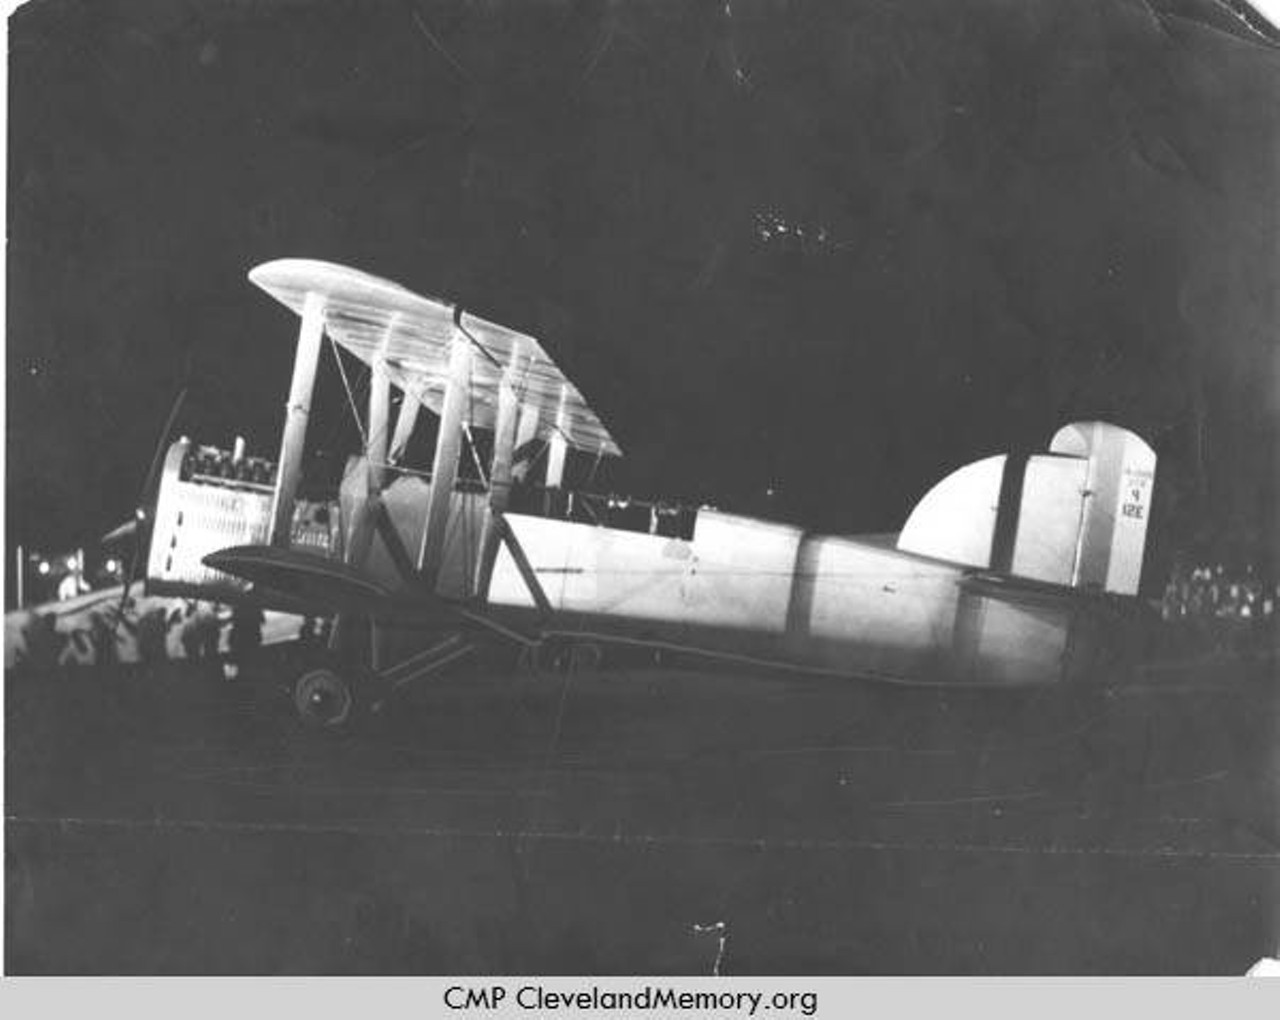  Plane Flying at Night, 1925 